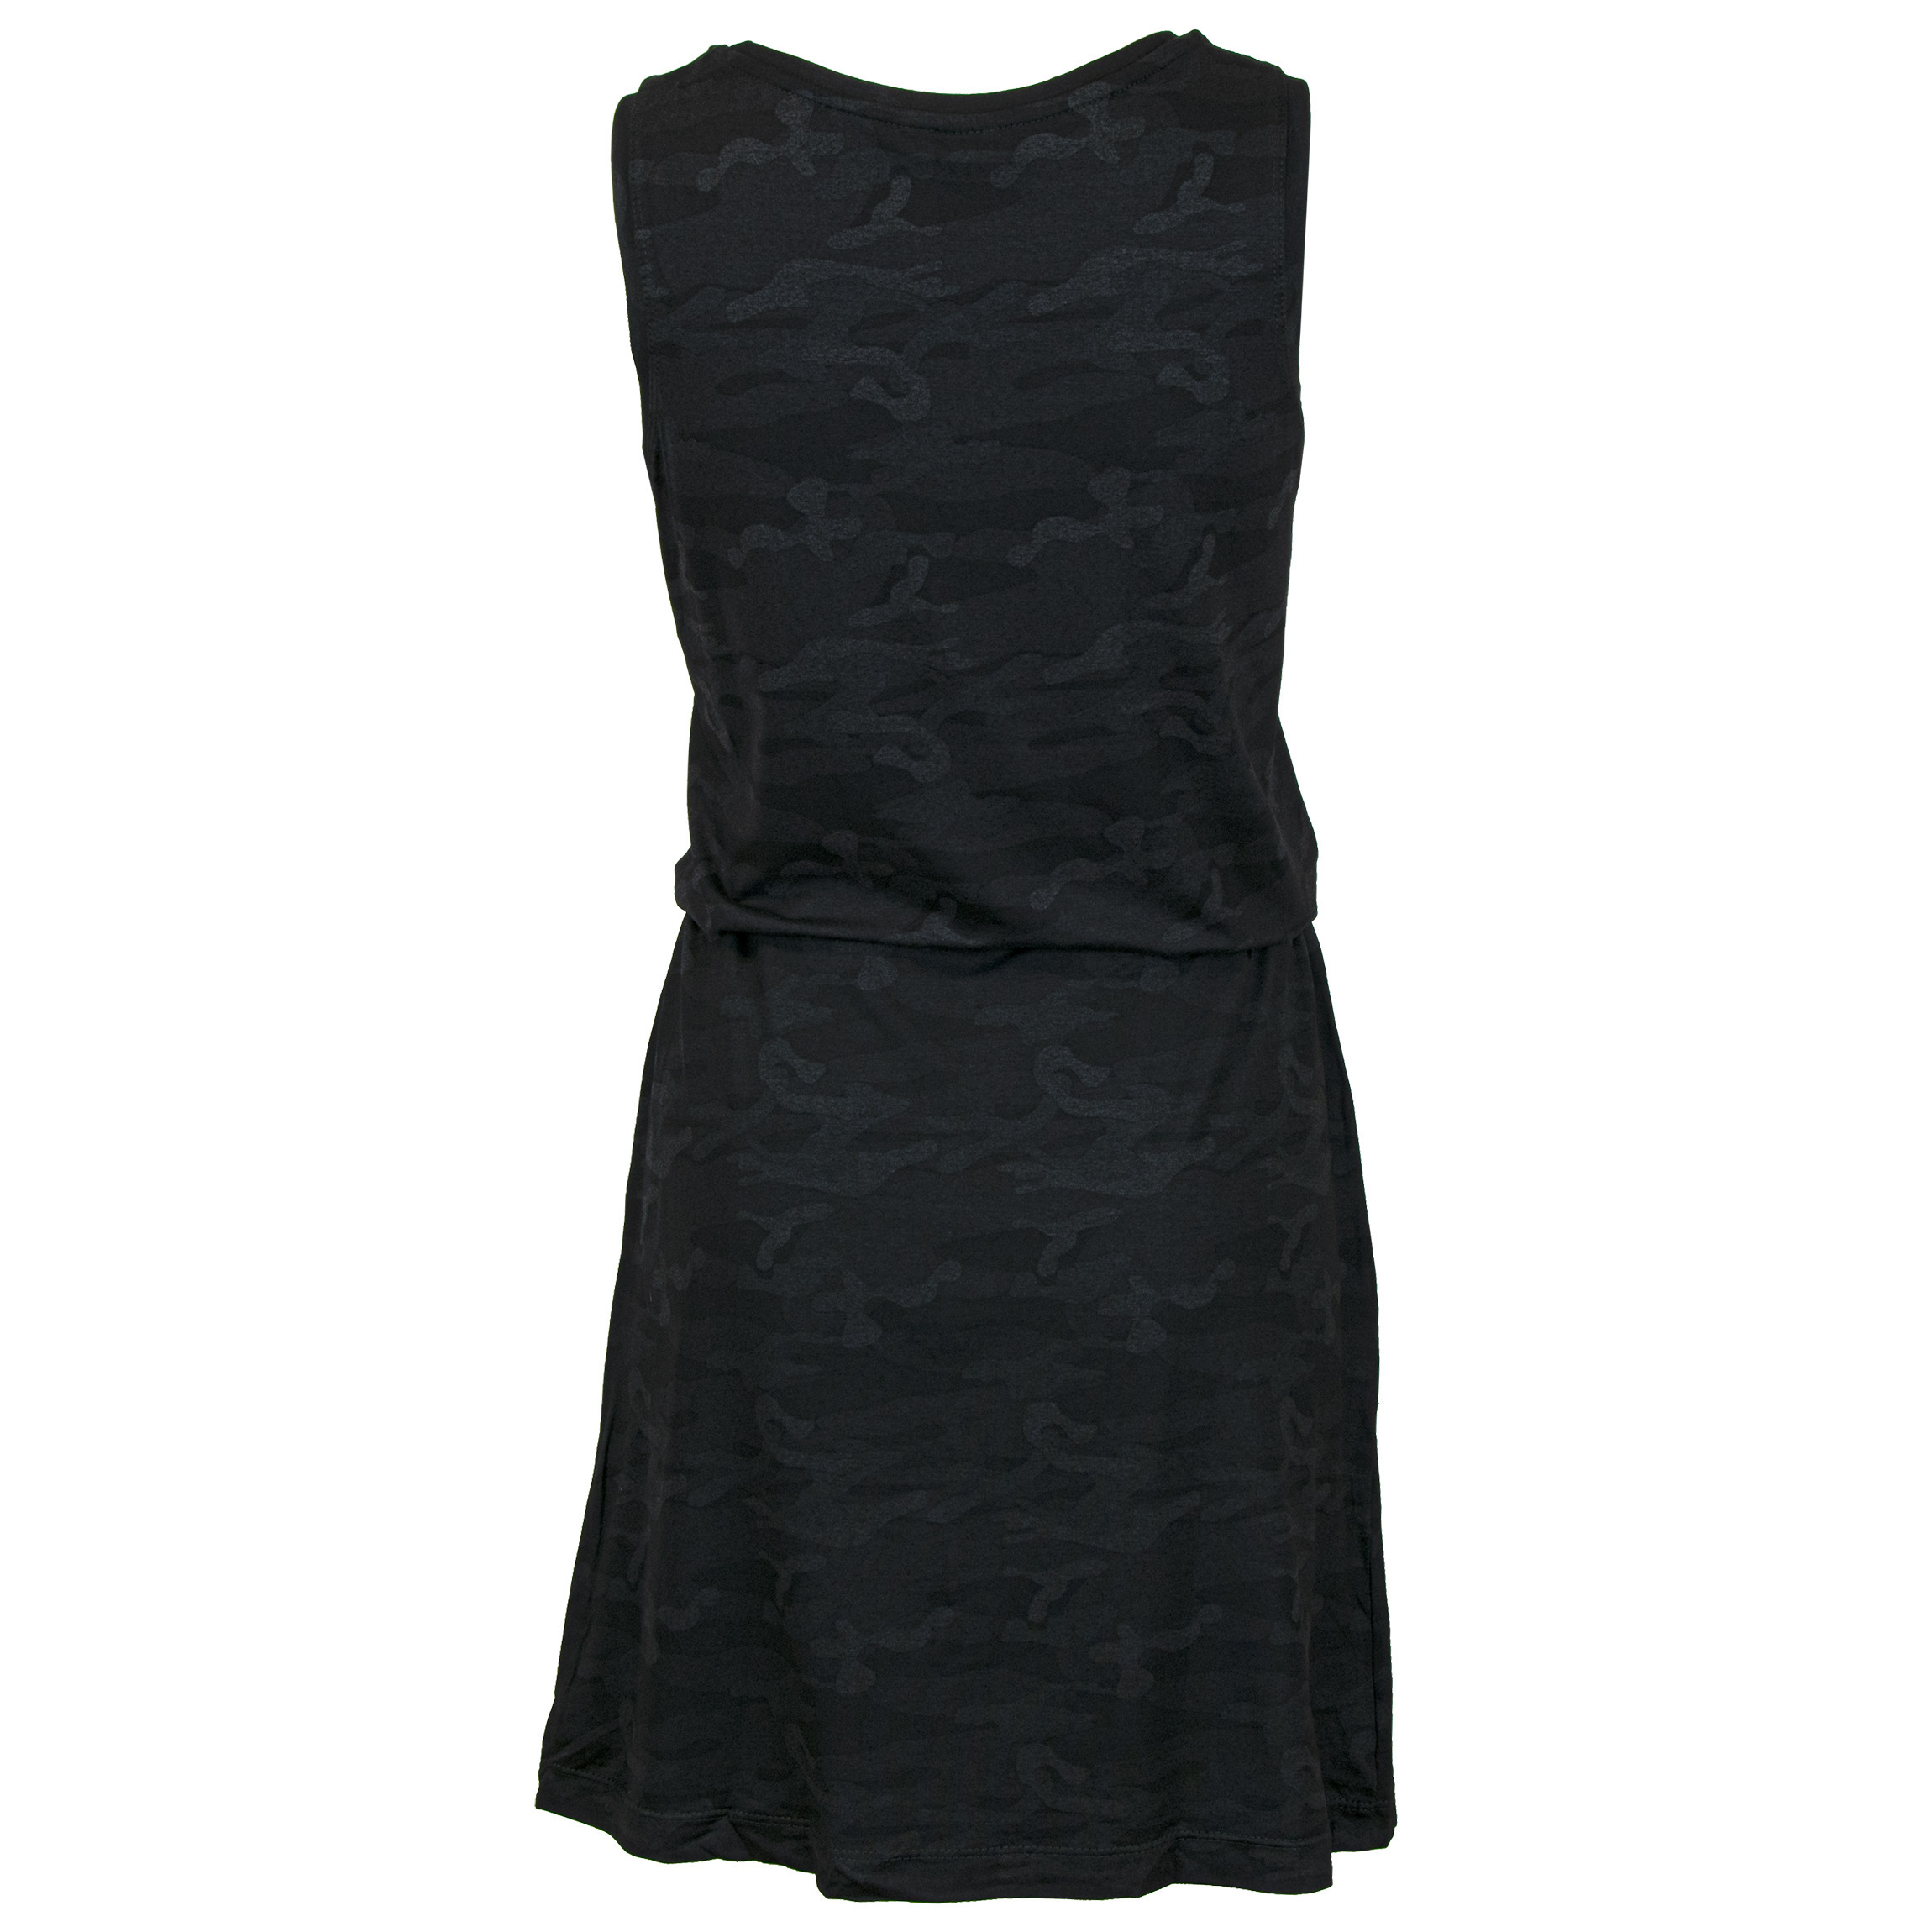 Member's Mark Women's Favorite Soft Pullover Dress Black Camo, Size Medium